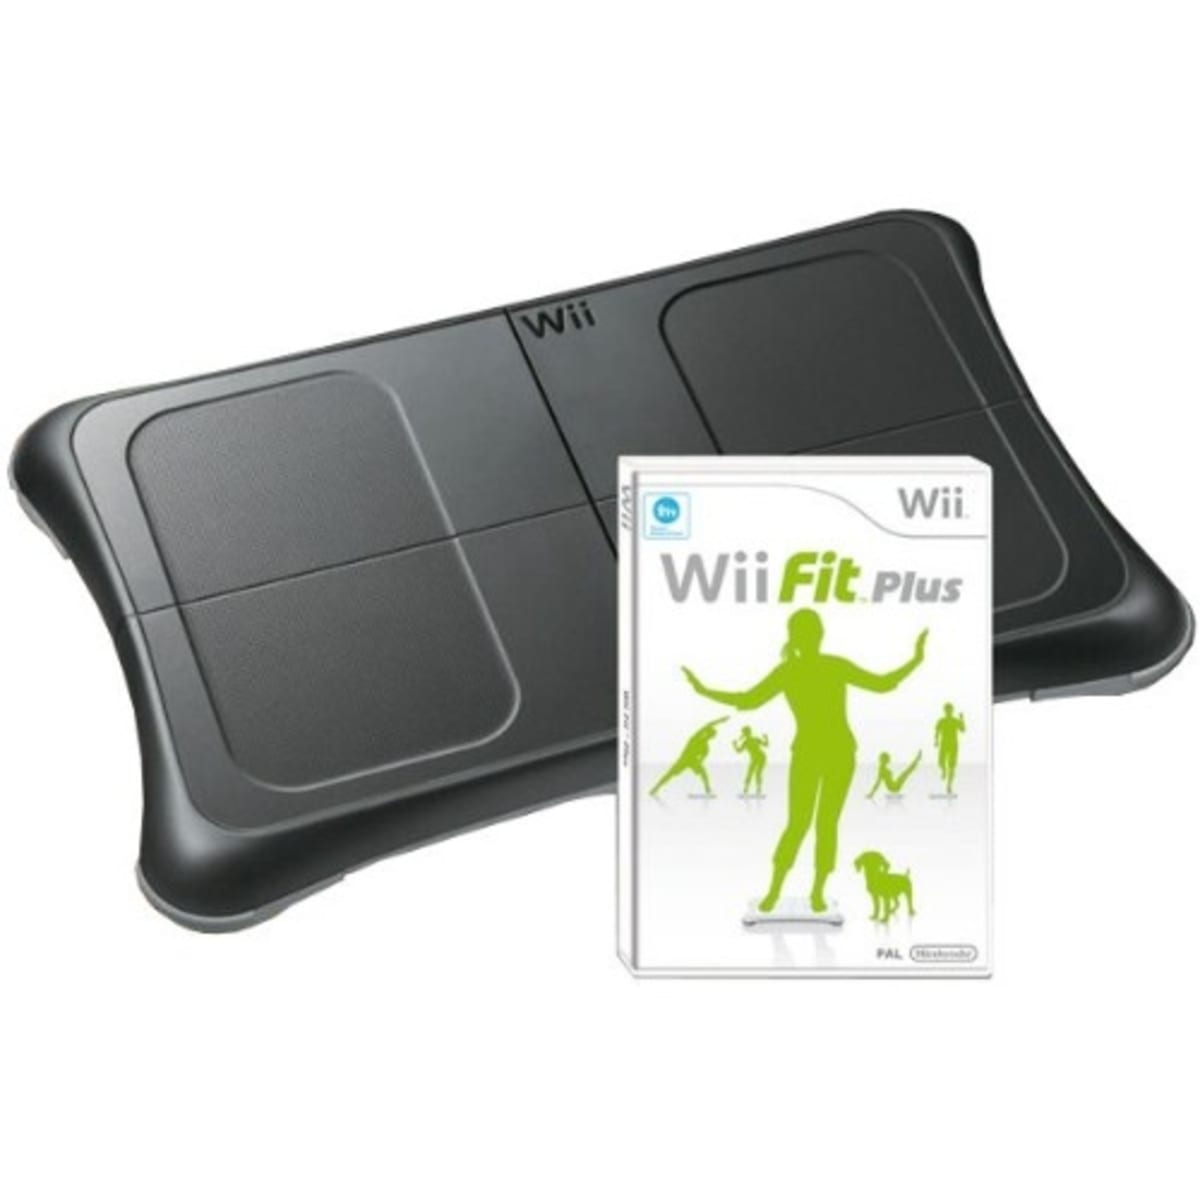 Wii Balance Board. Black Wii Balance Board. Фит плюс. Игра Wii Fit Plus для Nintendo Wii.